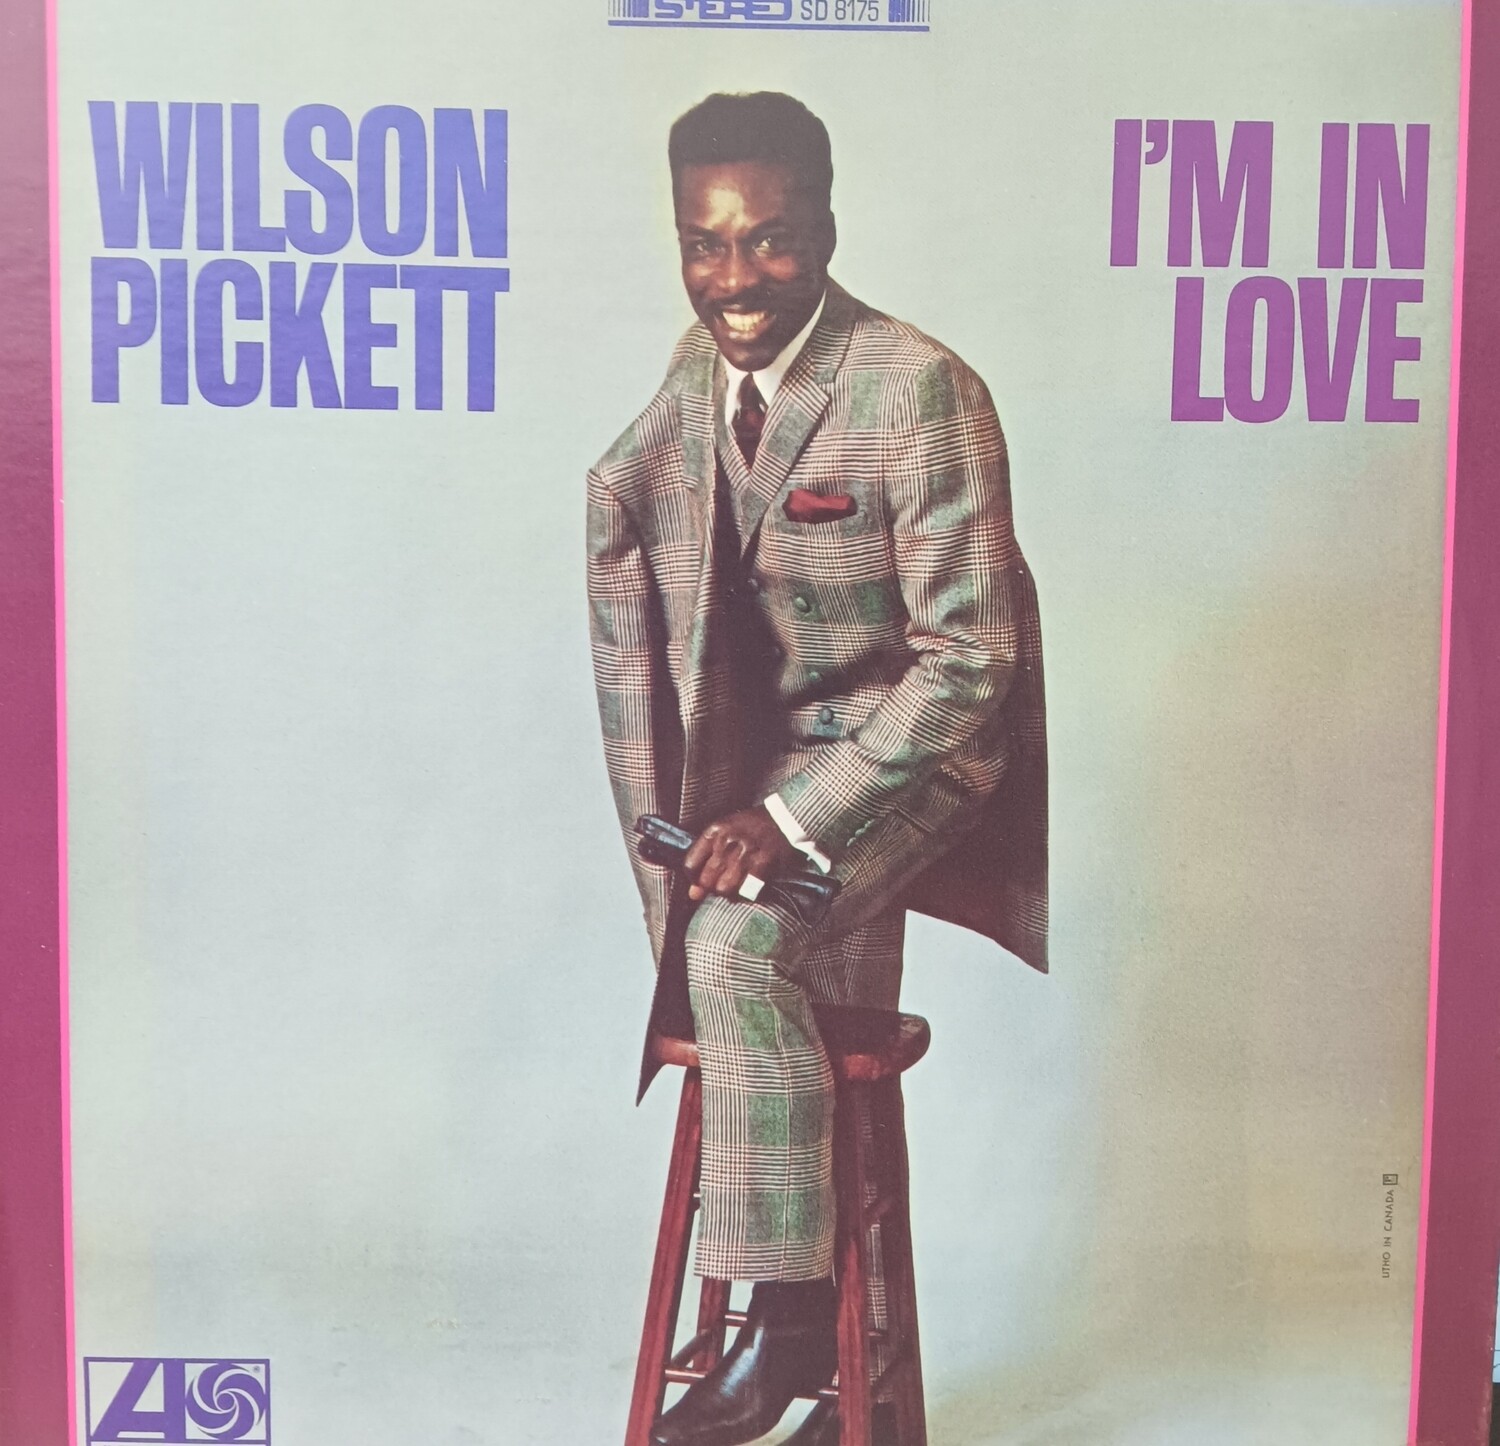 WILSON PICKETT - I'm in love